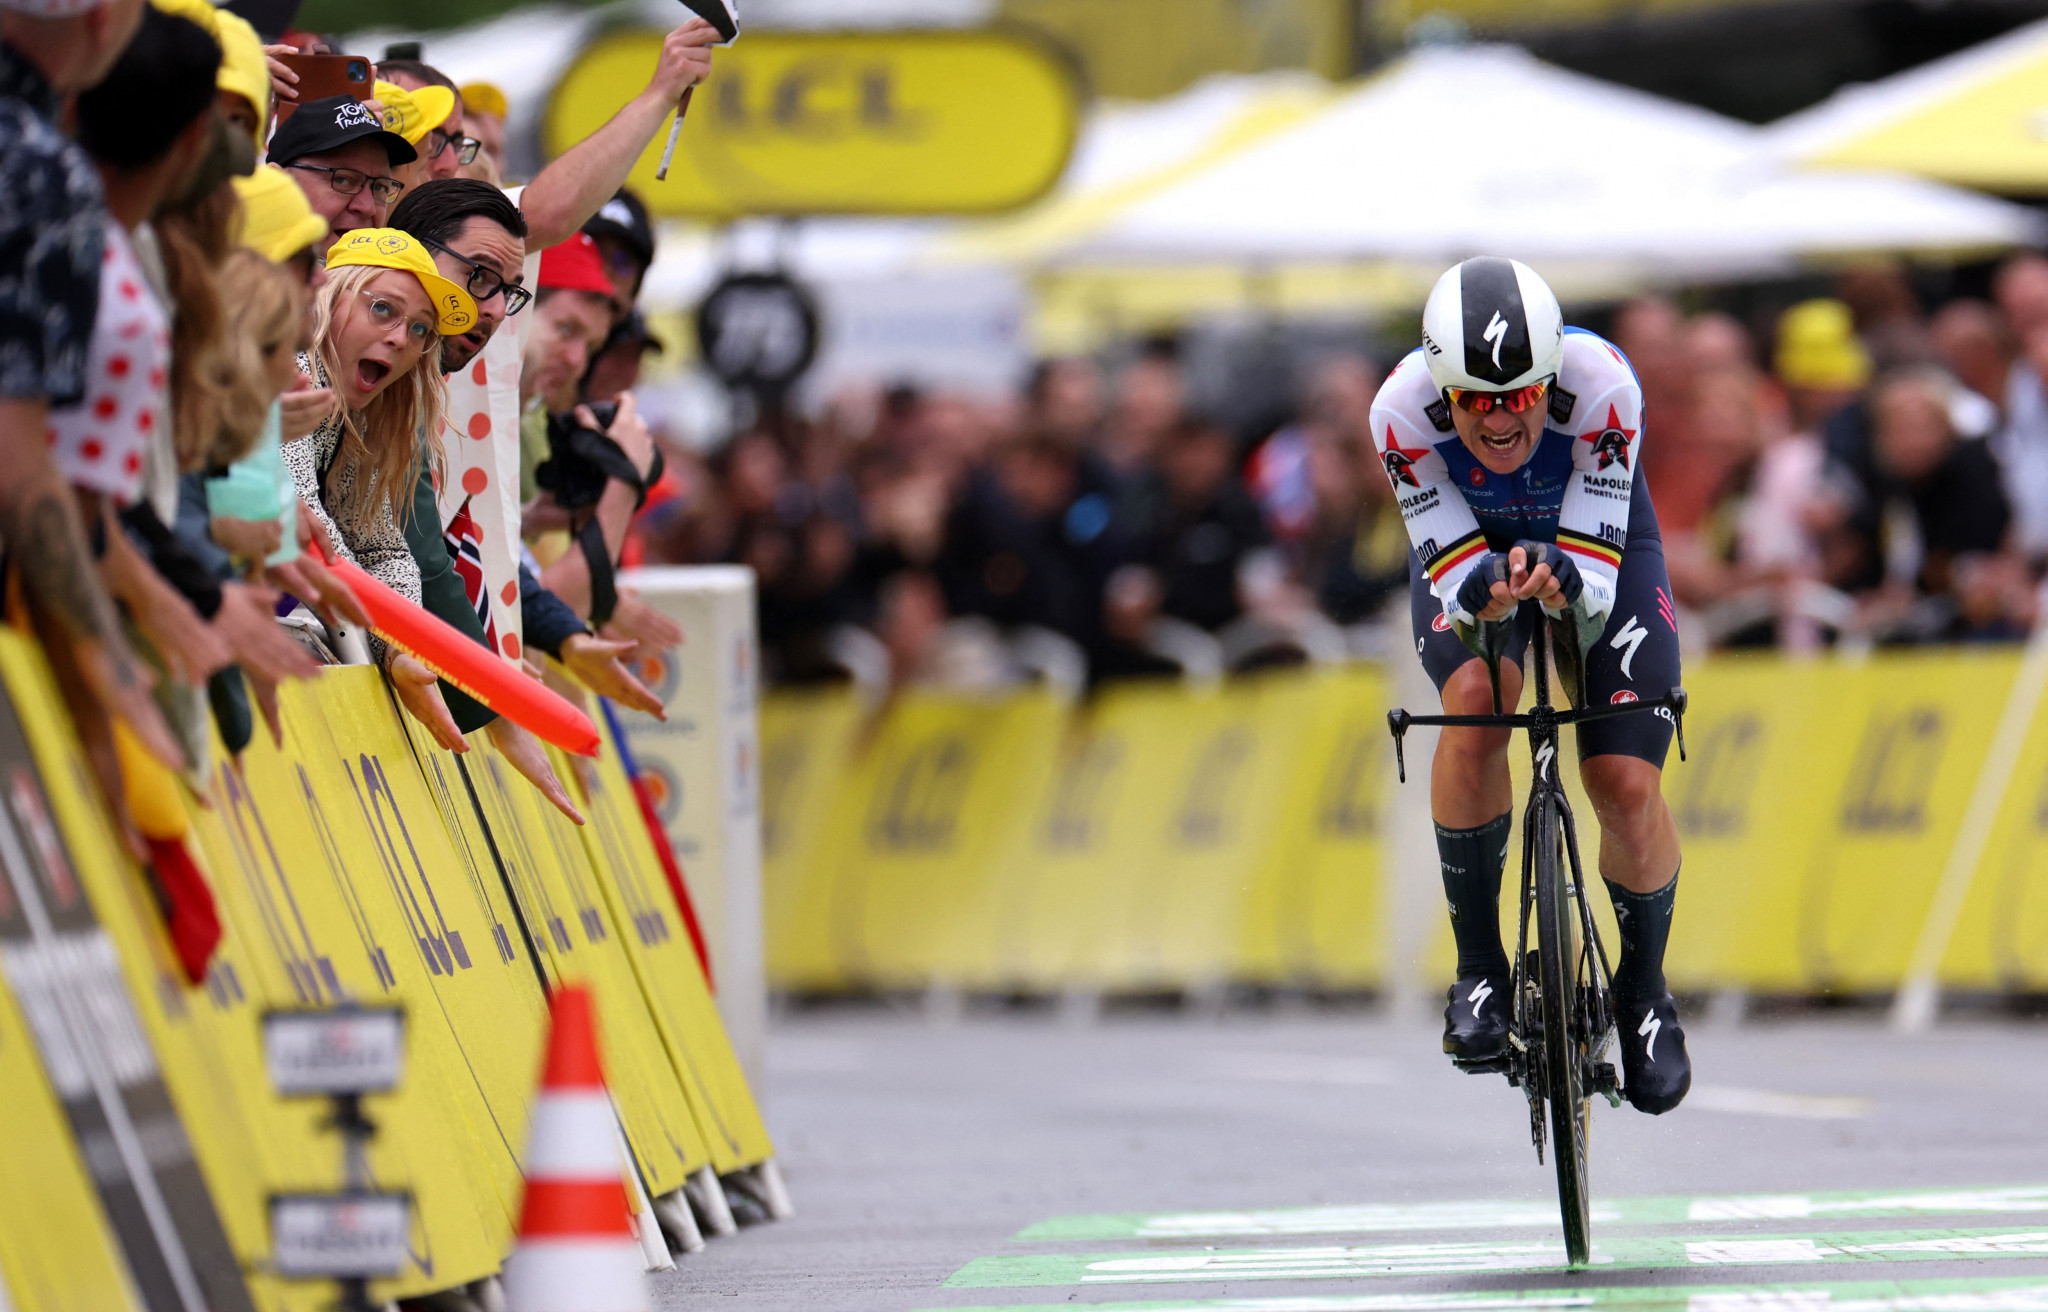 Lampaert claims shock stage win at rainy Tour de France opener in Copenhagen